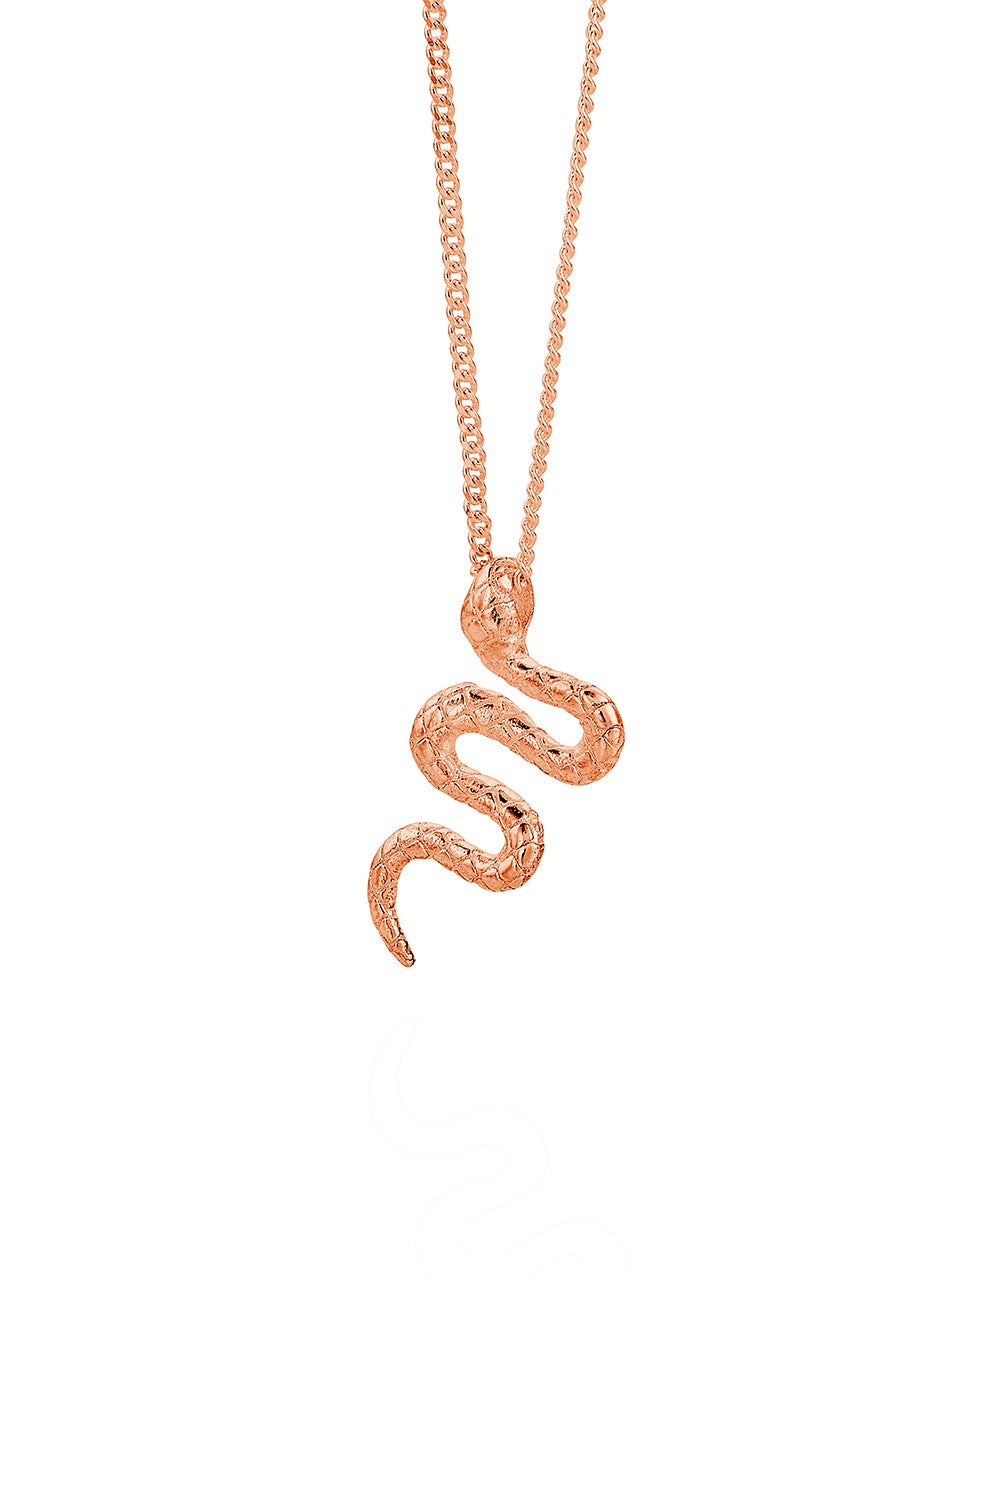 Unusual Diamond and Multi-Gem Snake Necklace